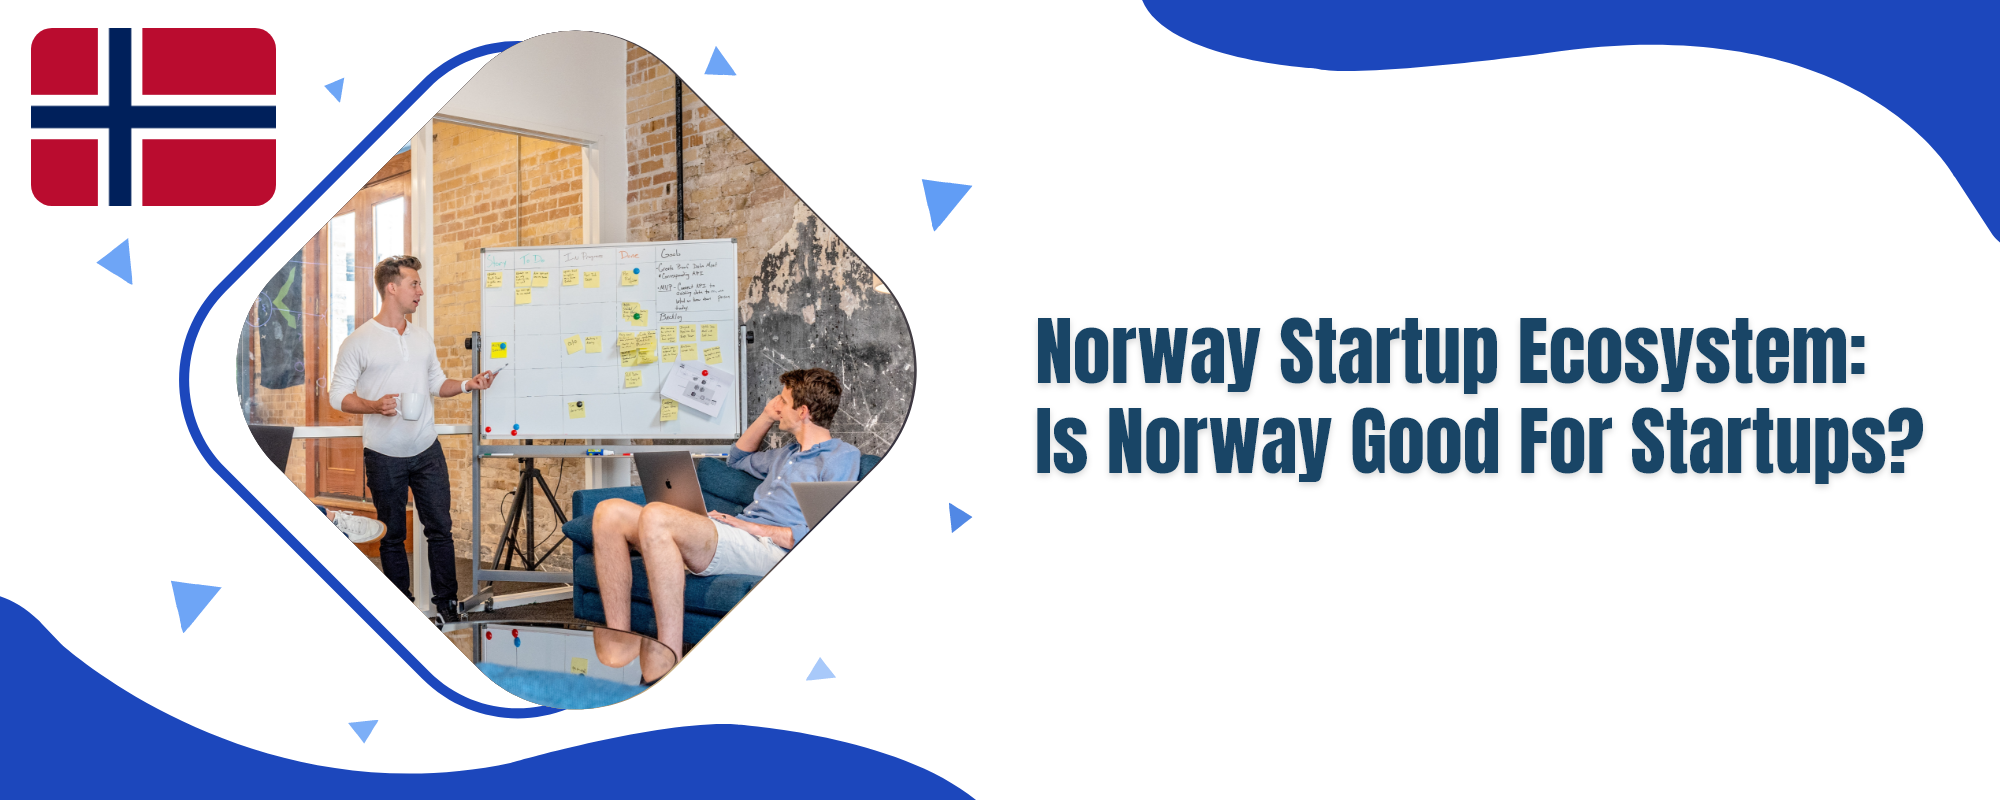 Norway startup ecosystem